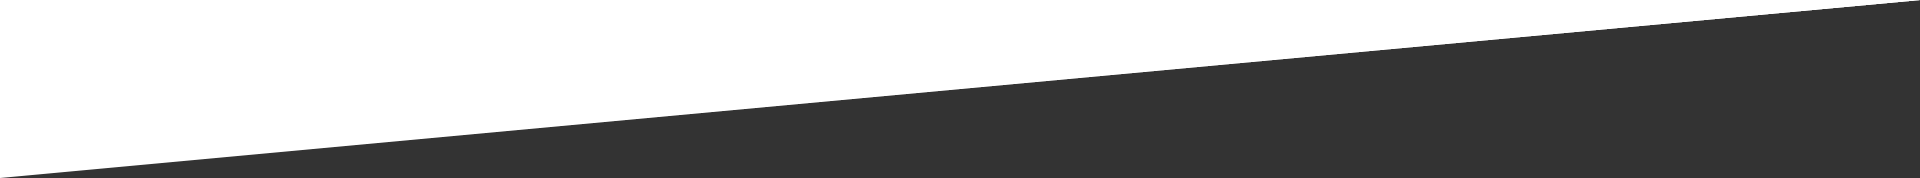 Una imagen pixelada de una escalera negra sobre un fondo blanco.